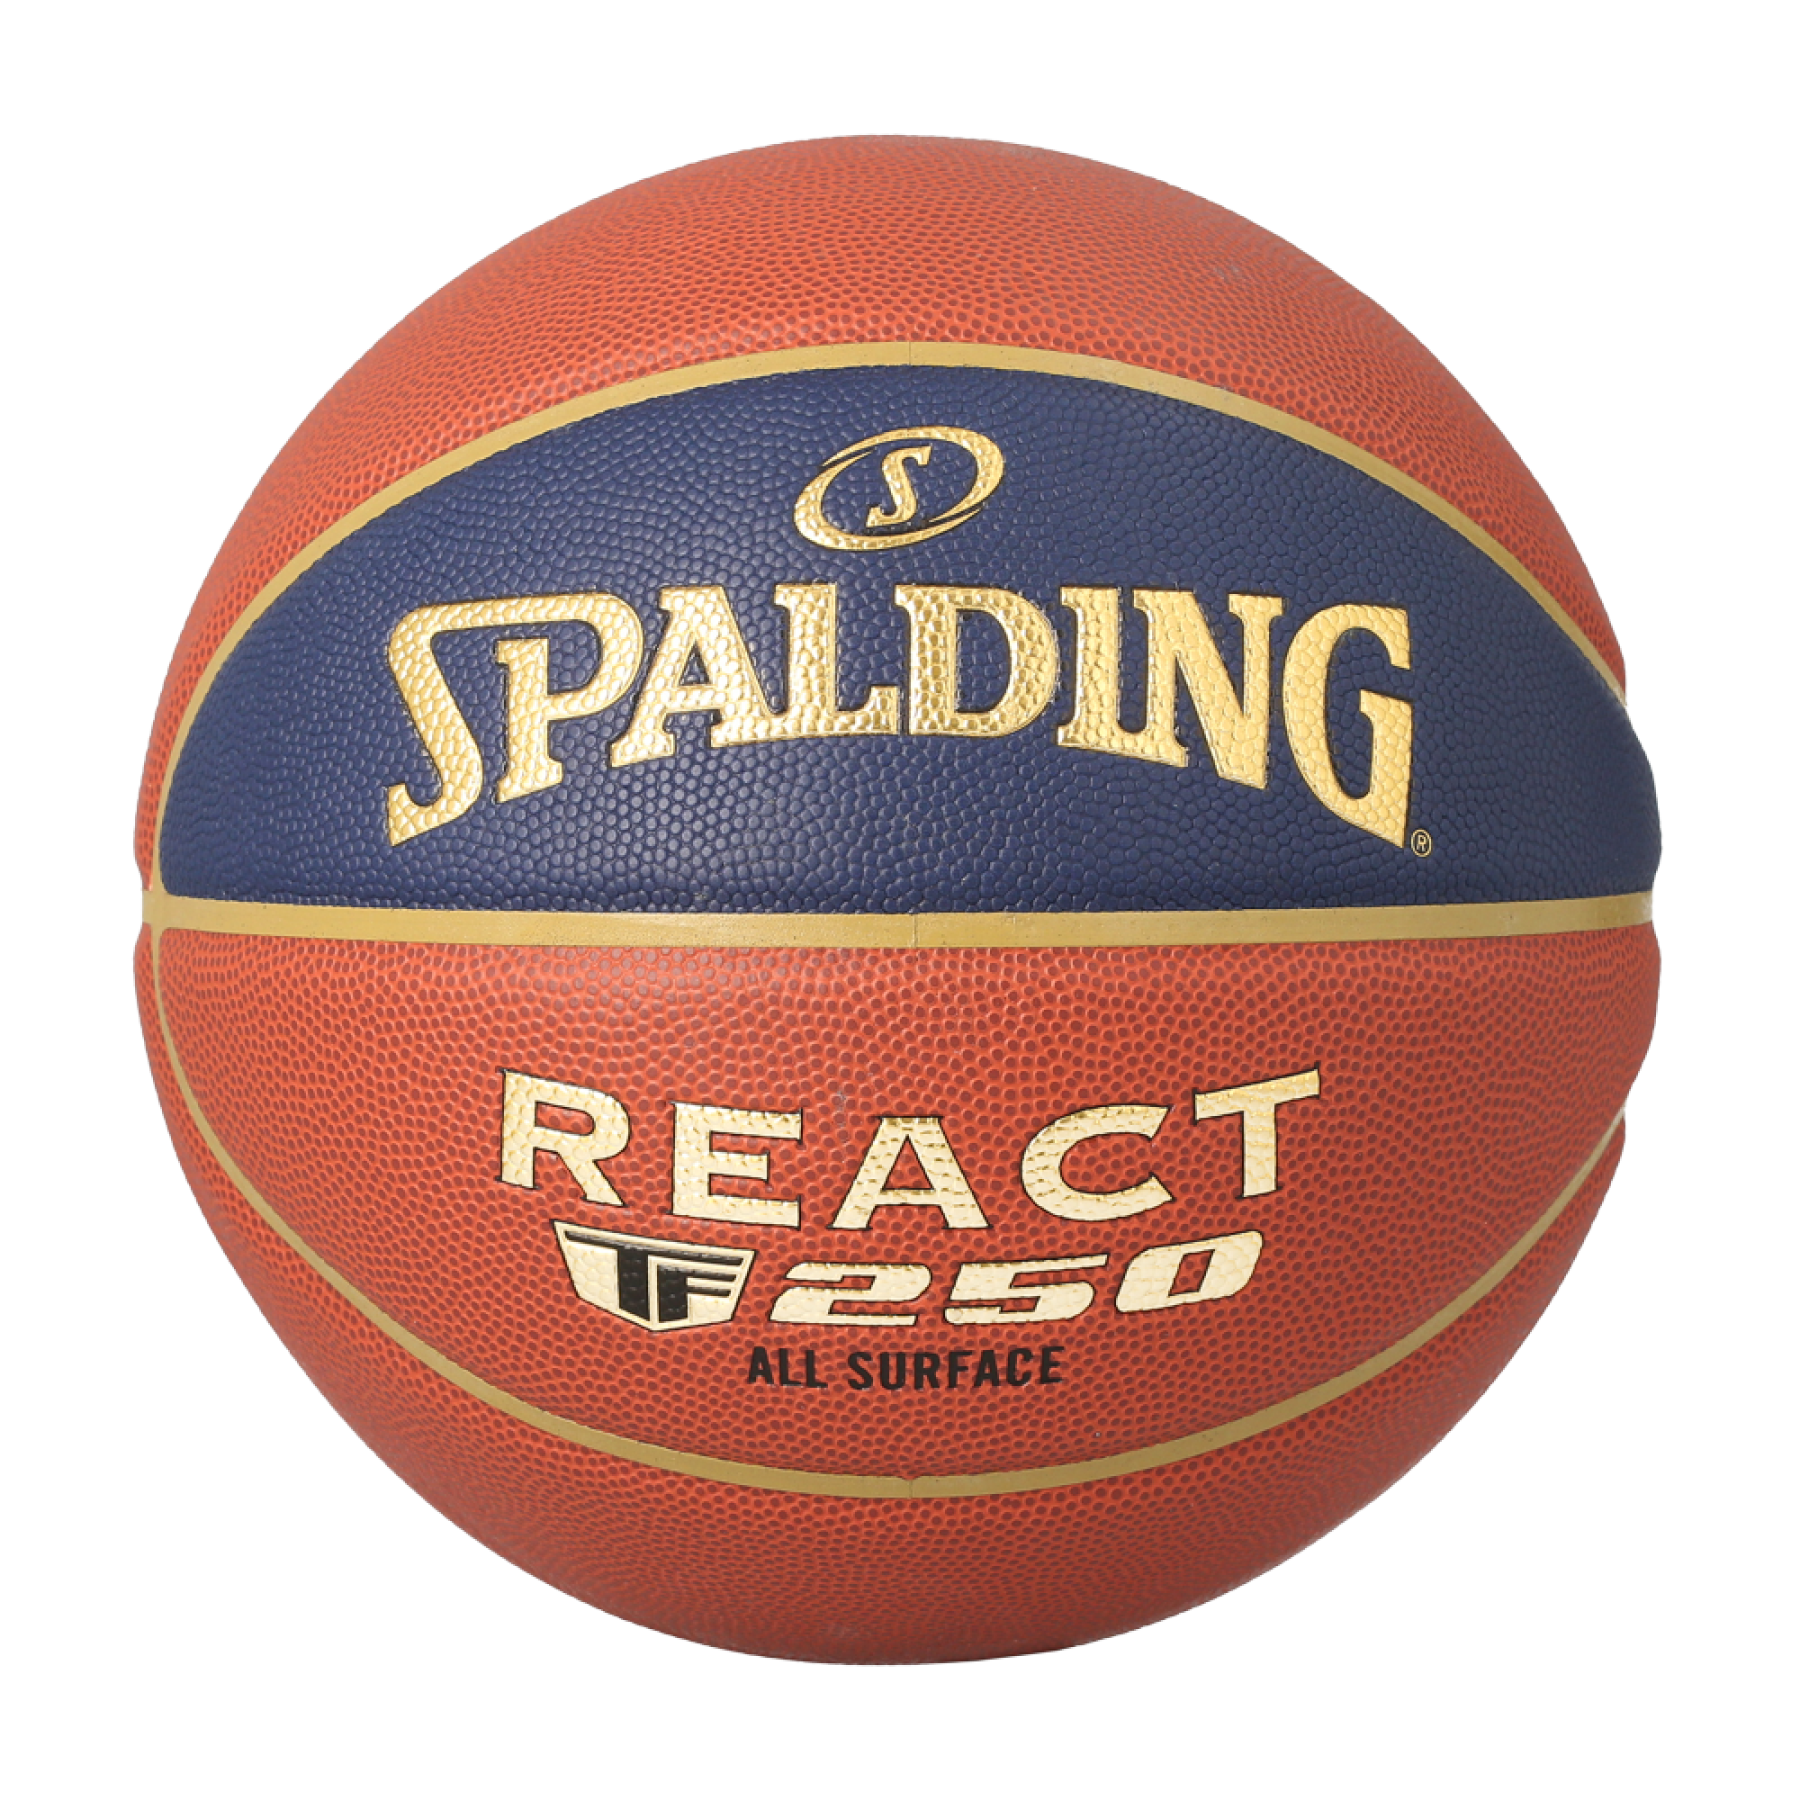 Basketball Spalding React TF-250